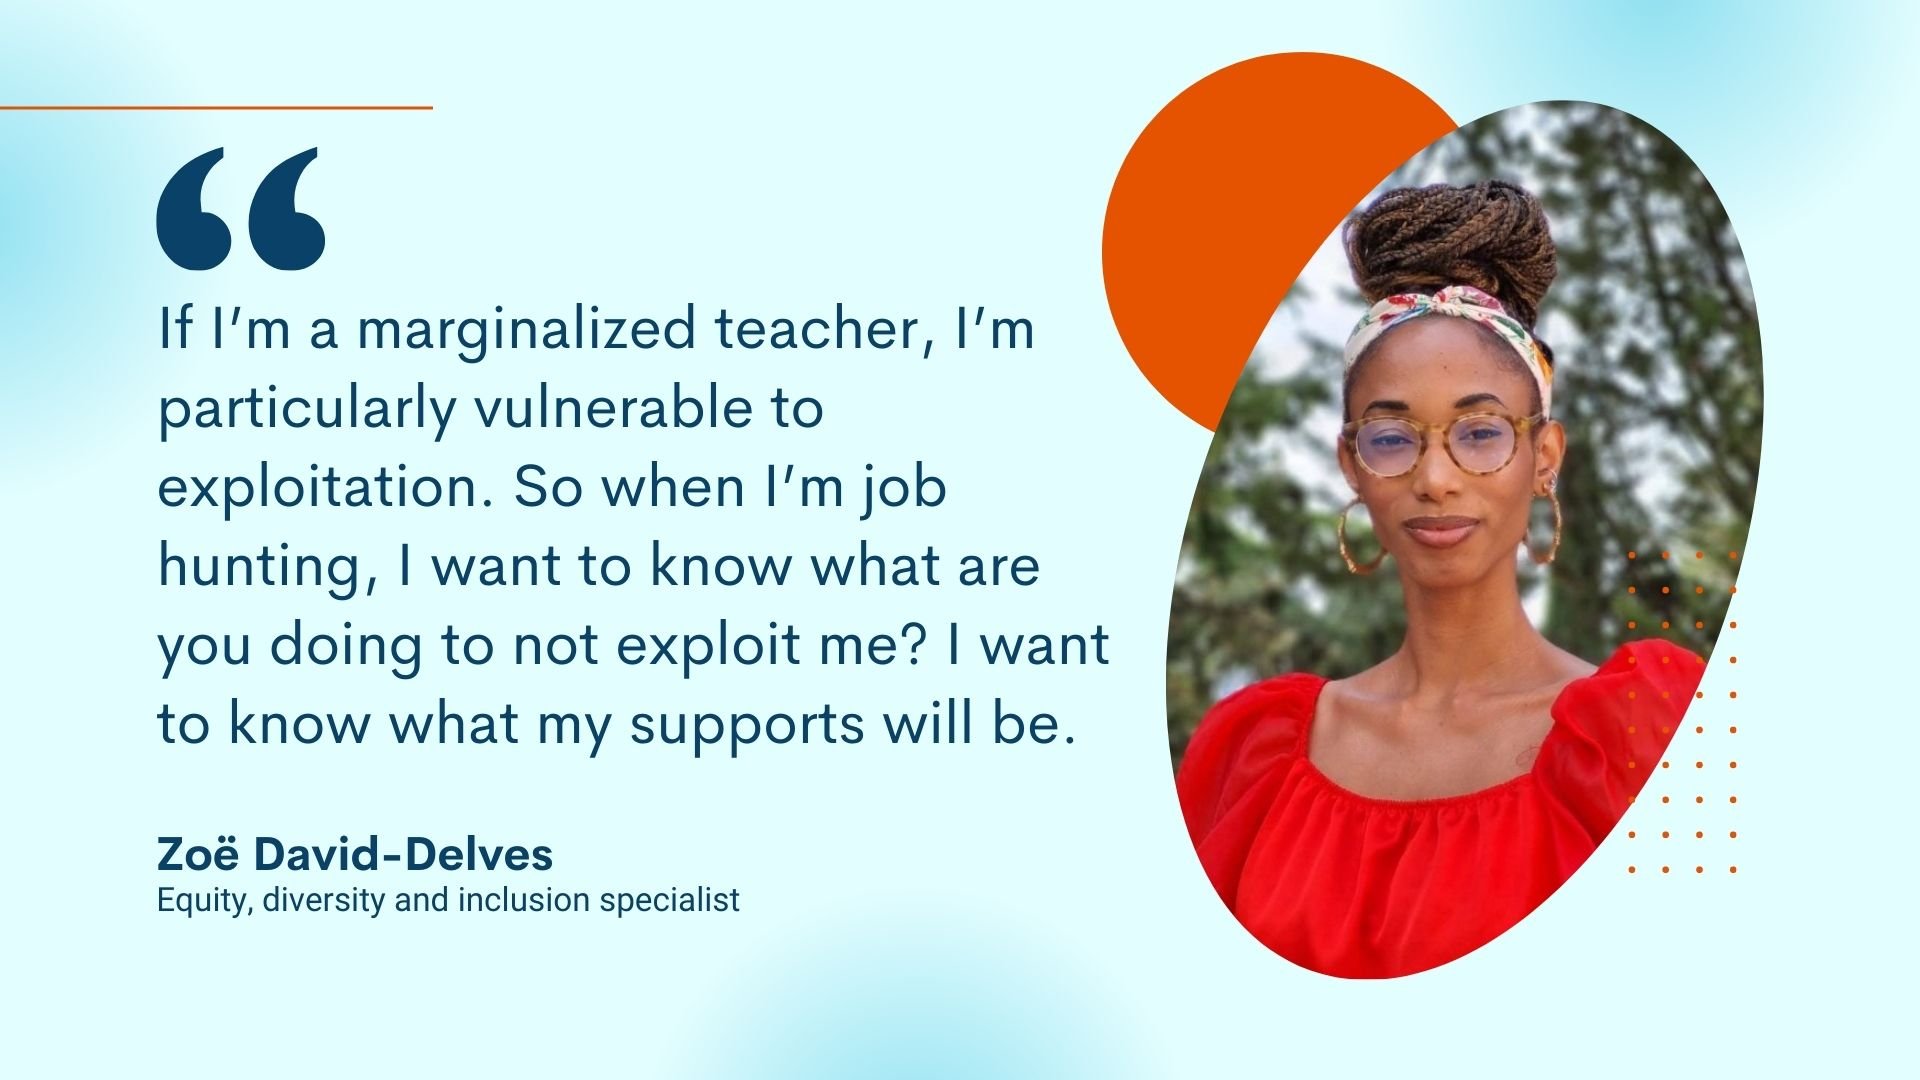 Zoe David Delves on marginalized teachers